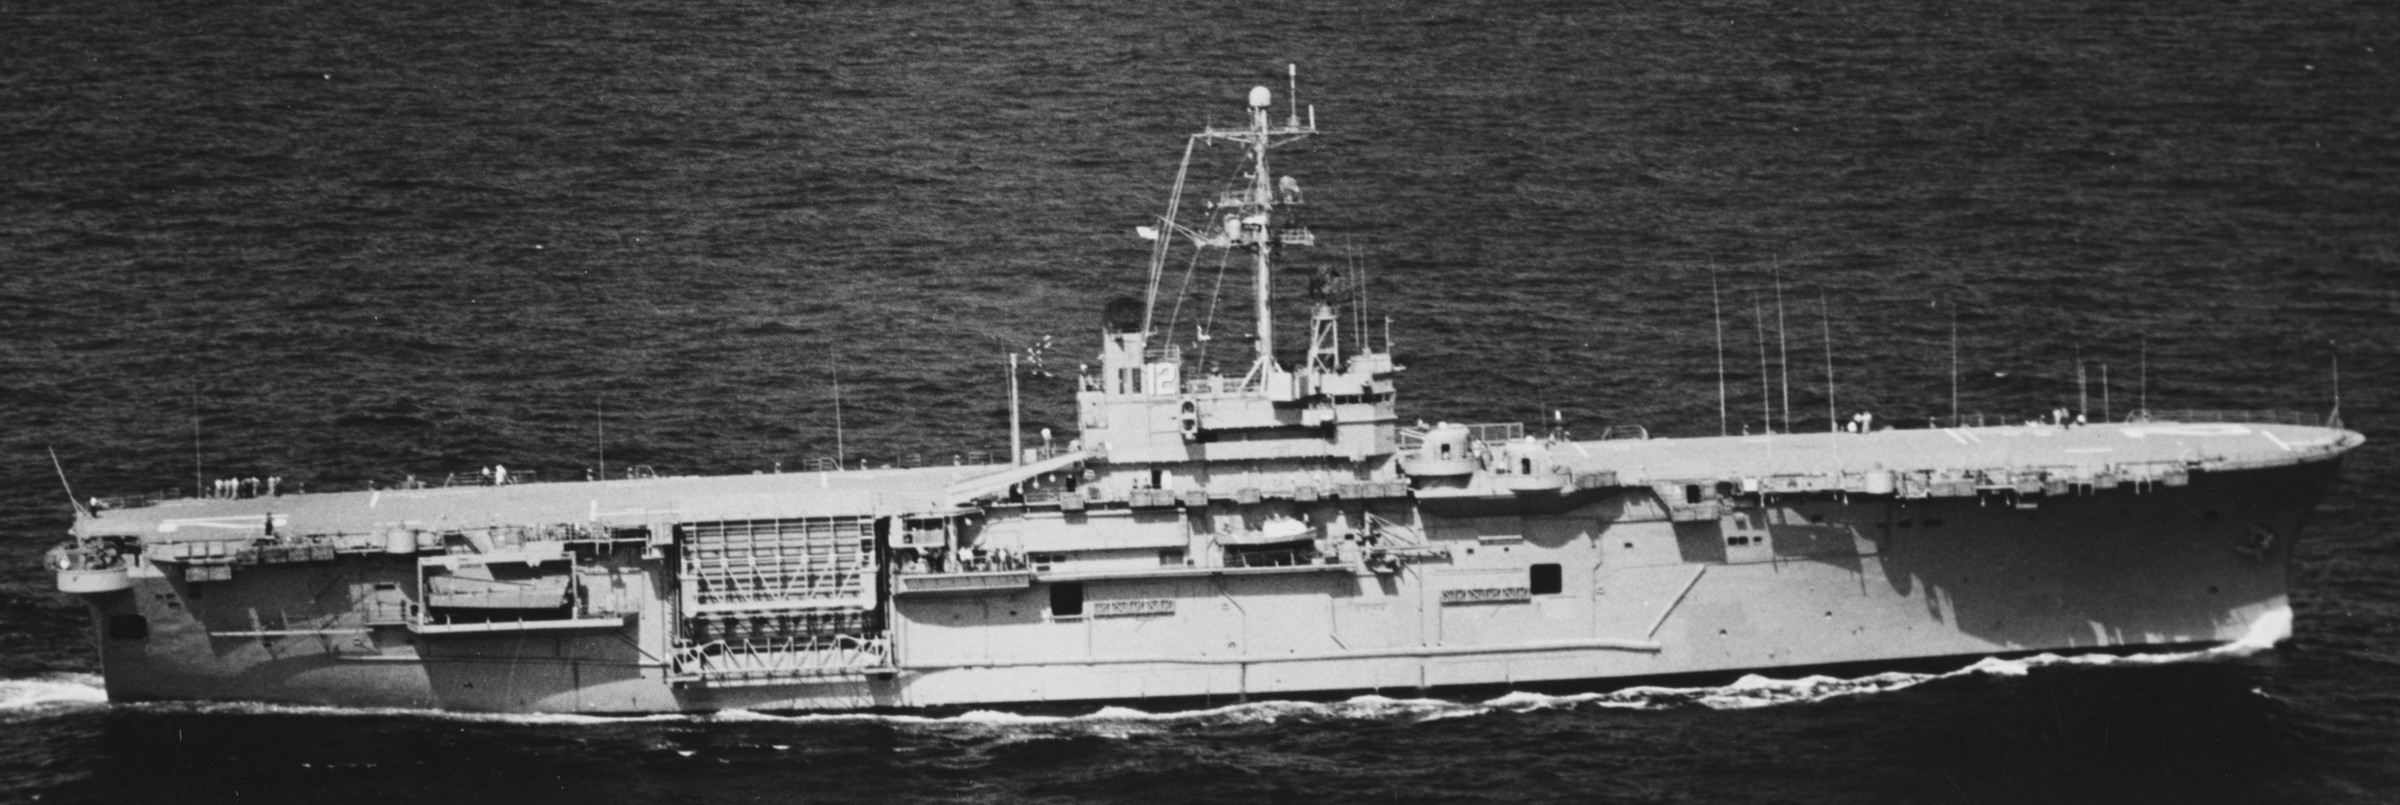 lph-12 uss inchon iwo jima class amphibious assault ship landing platform helicopter us navy 03